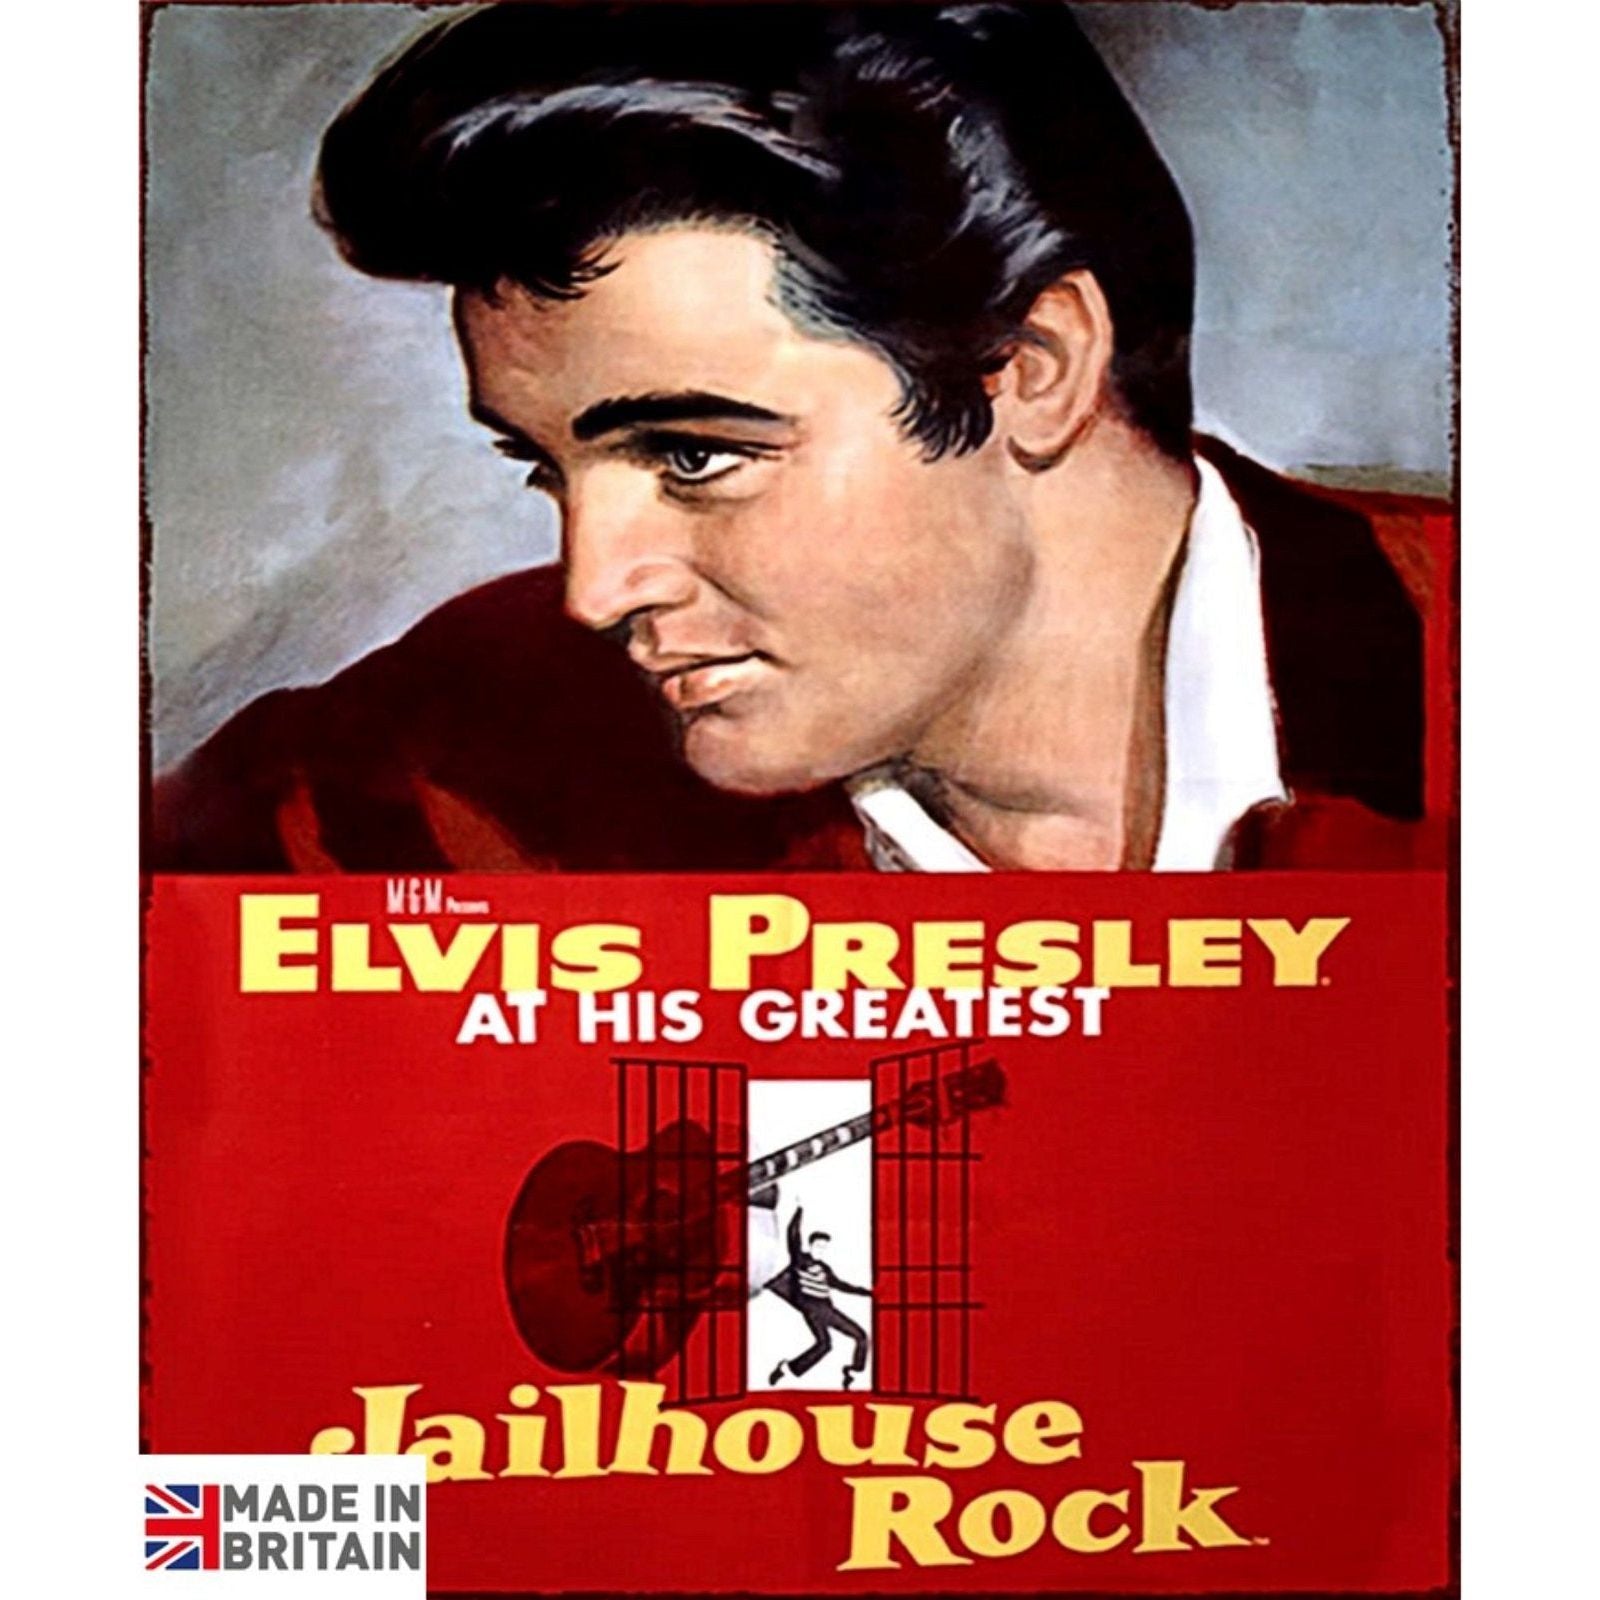 Large Metal Sign 60 x 49.5cm Elvis Presley Jailhouse Rock - Ashton and Finch